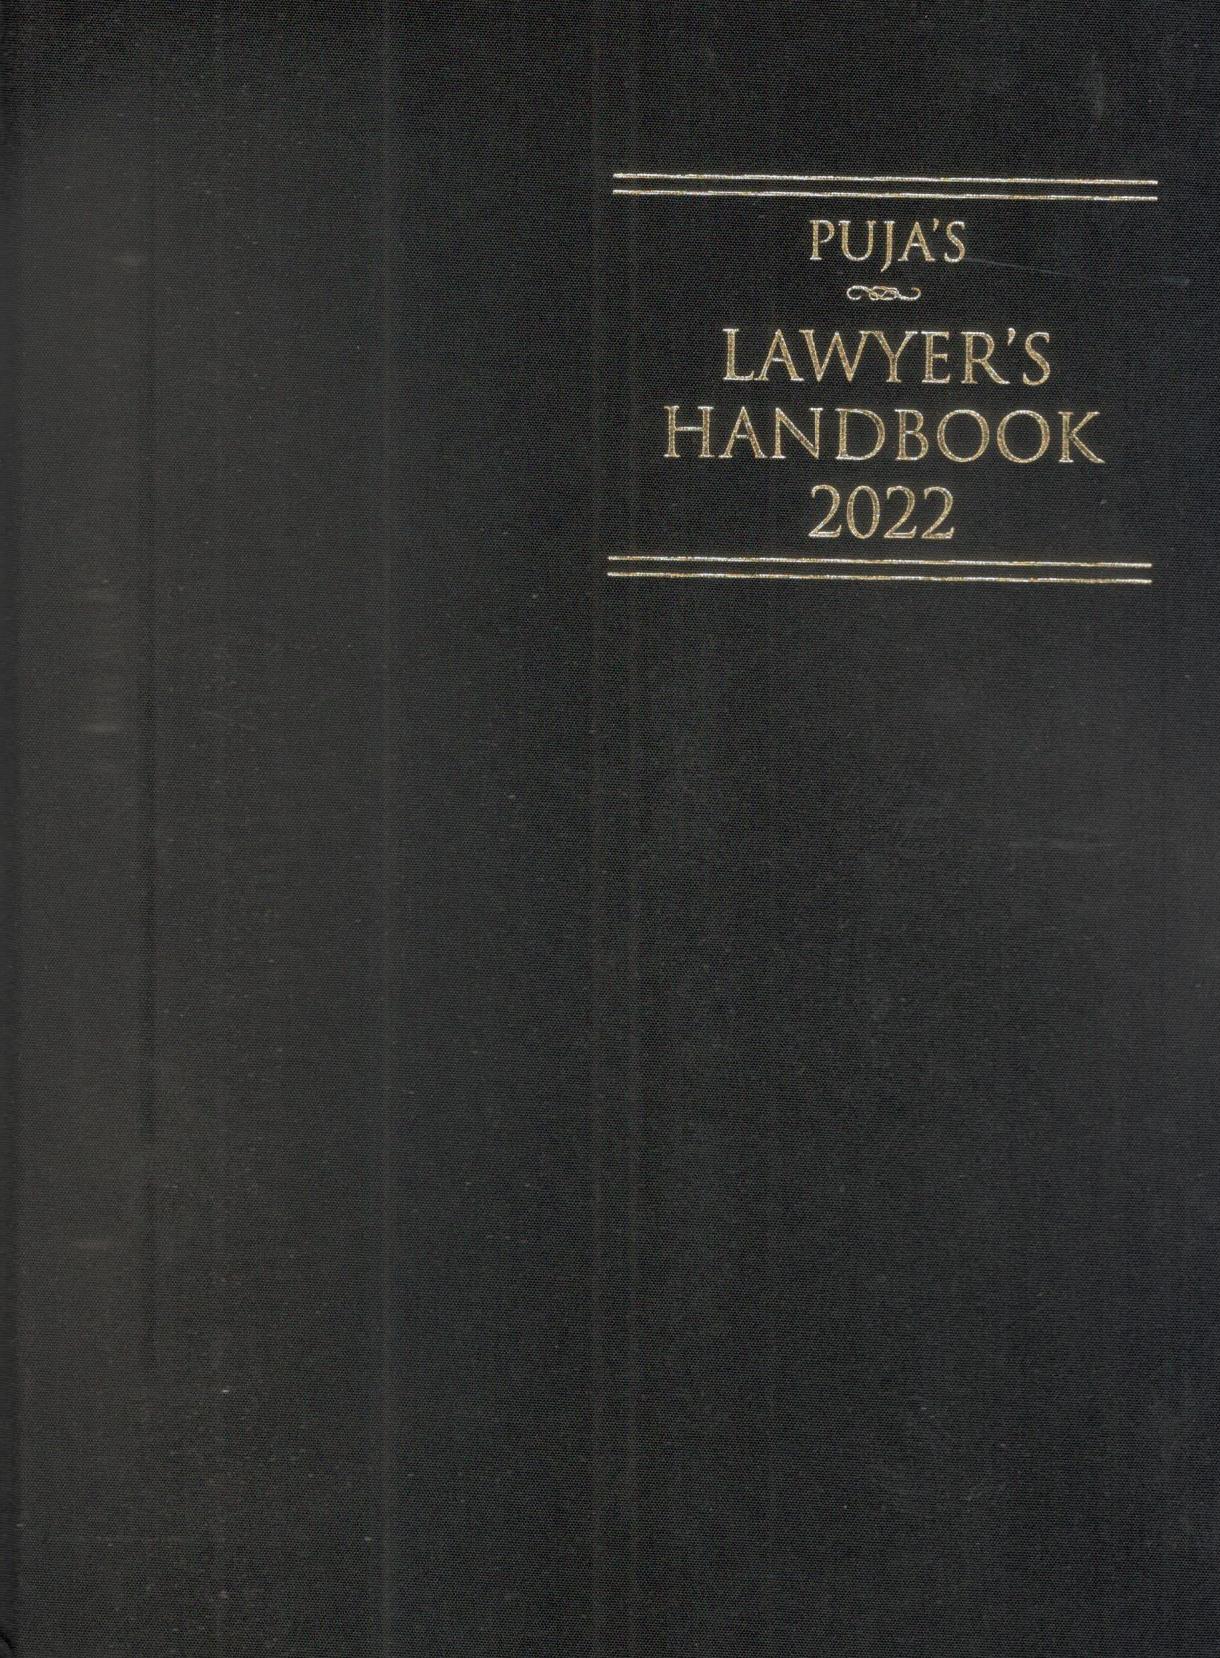  Buy Puja’s Lawyer’s Handbook 2022 - Black Small Size Regular Hardbound